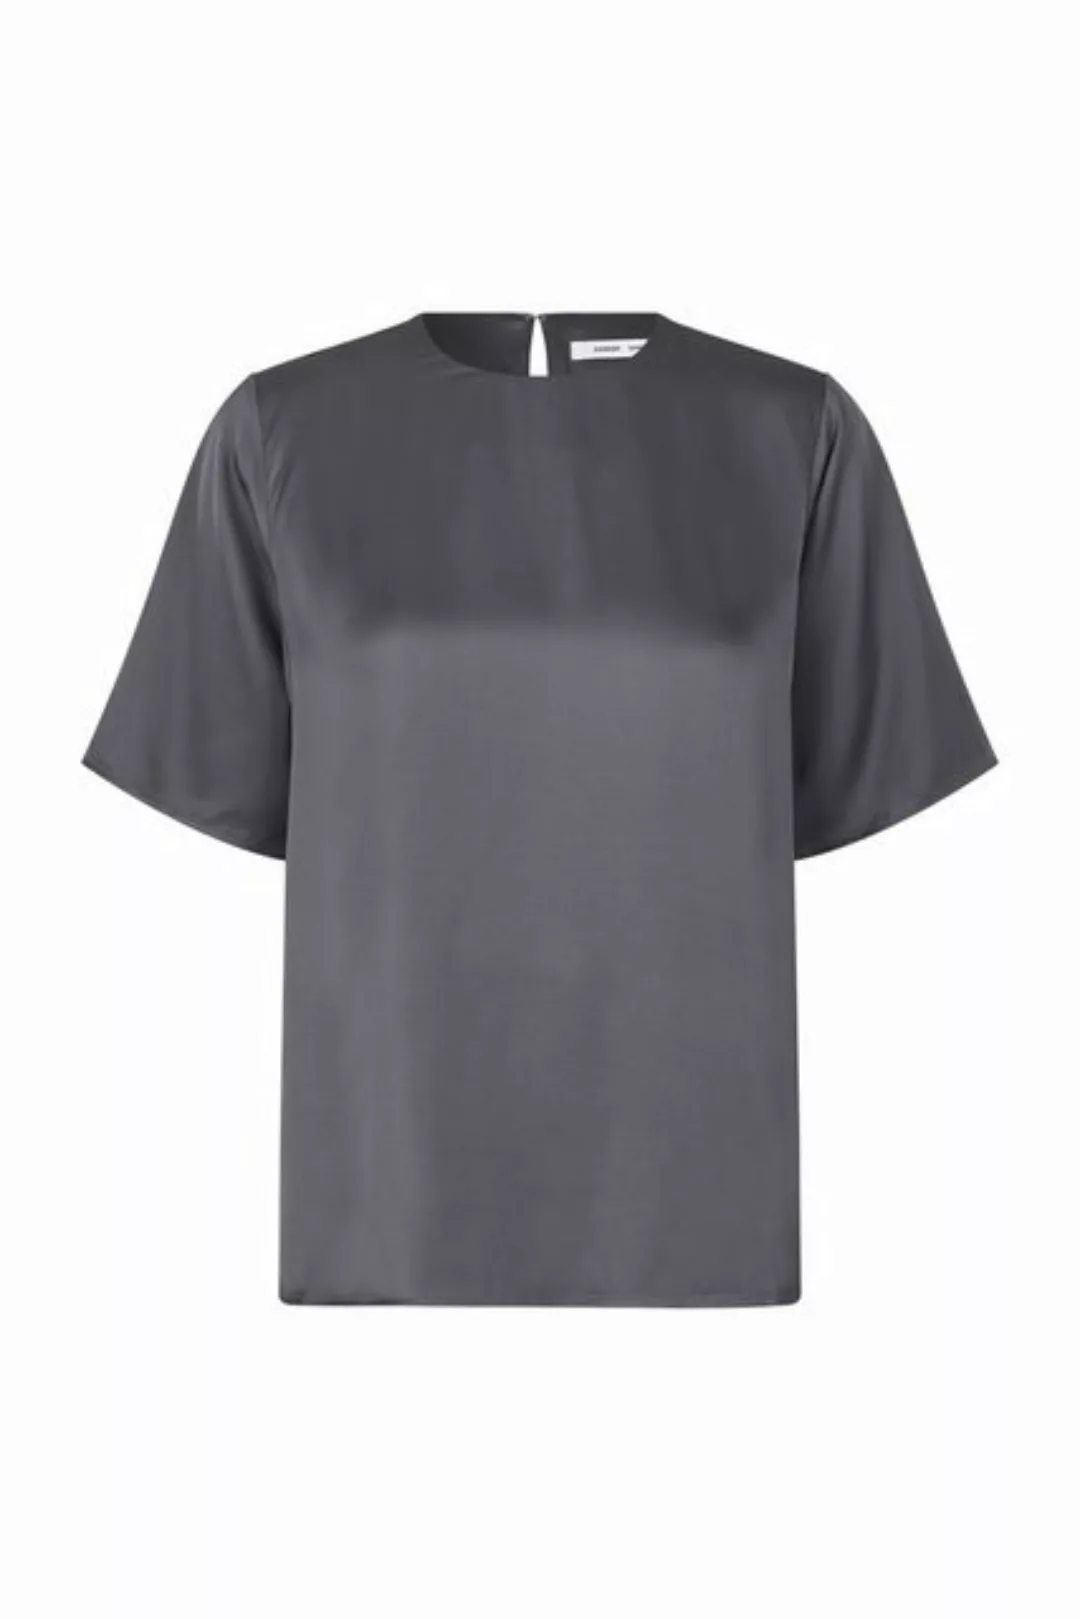 Samsoe & Samsoe T-Shirt Denise top 14905 günstig online kaufen